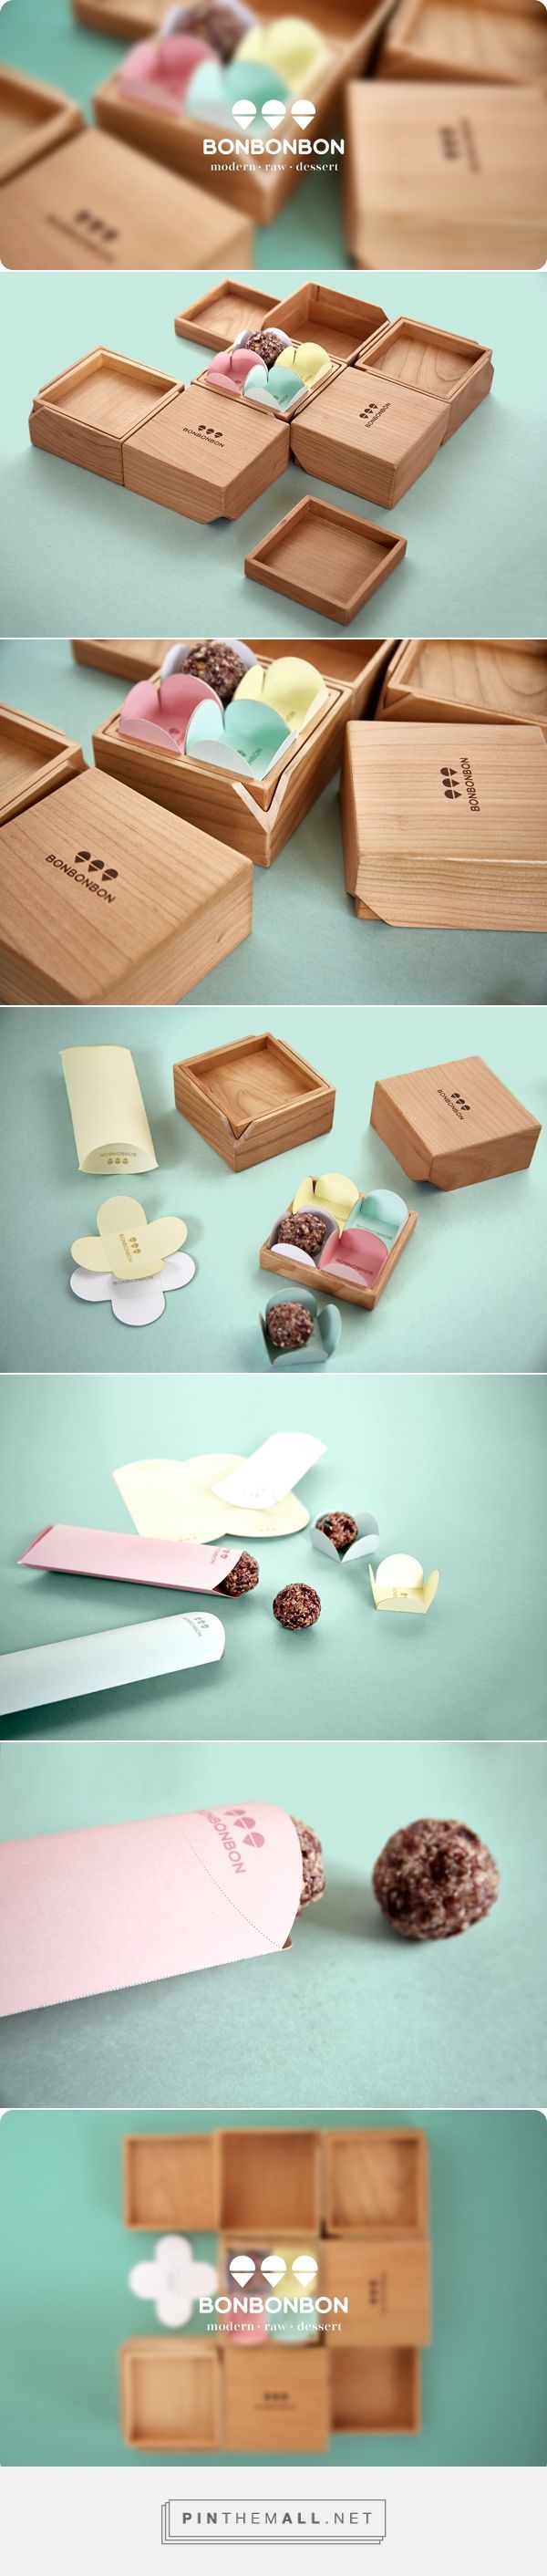 Caja de madera para bombones. Bonbonbon wooden box packaging